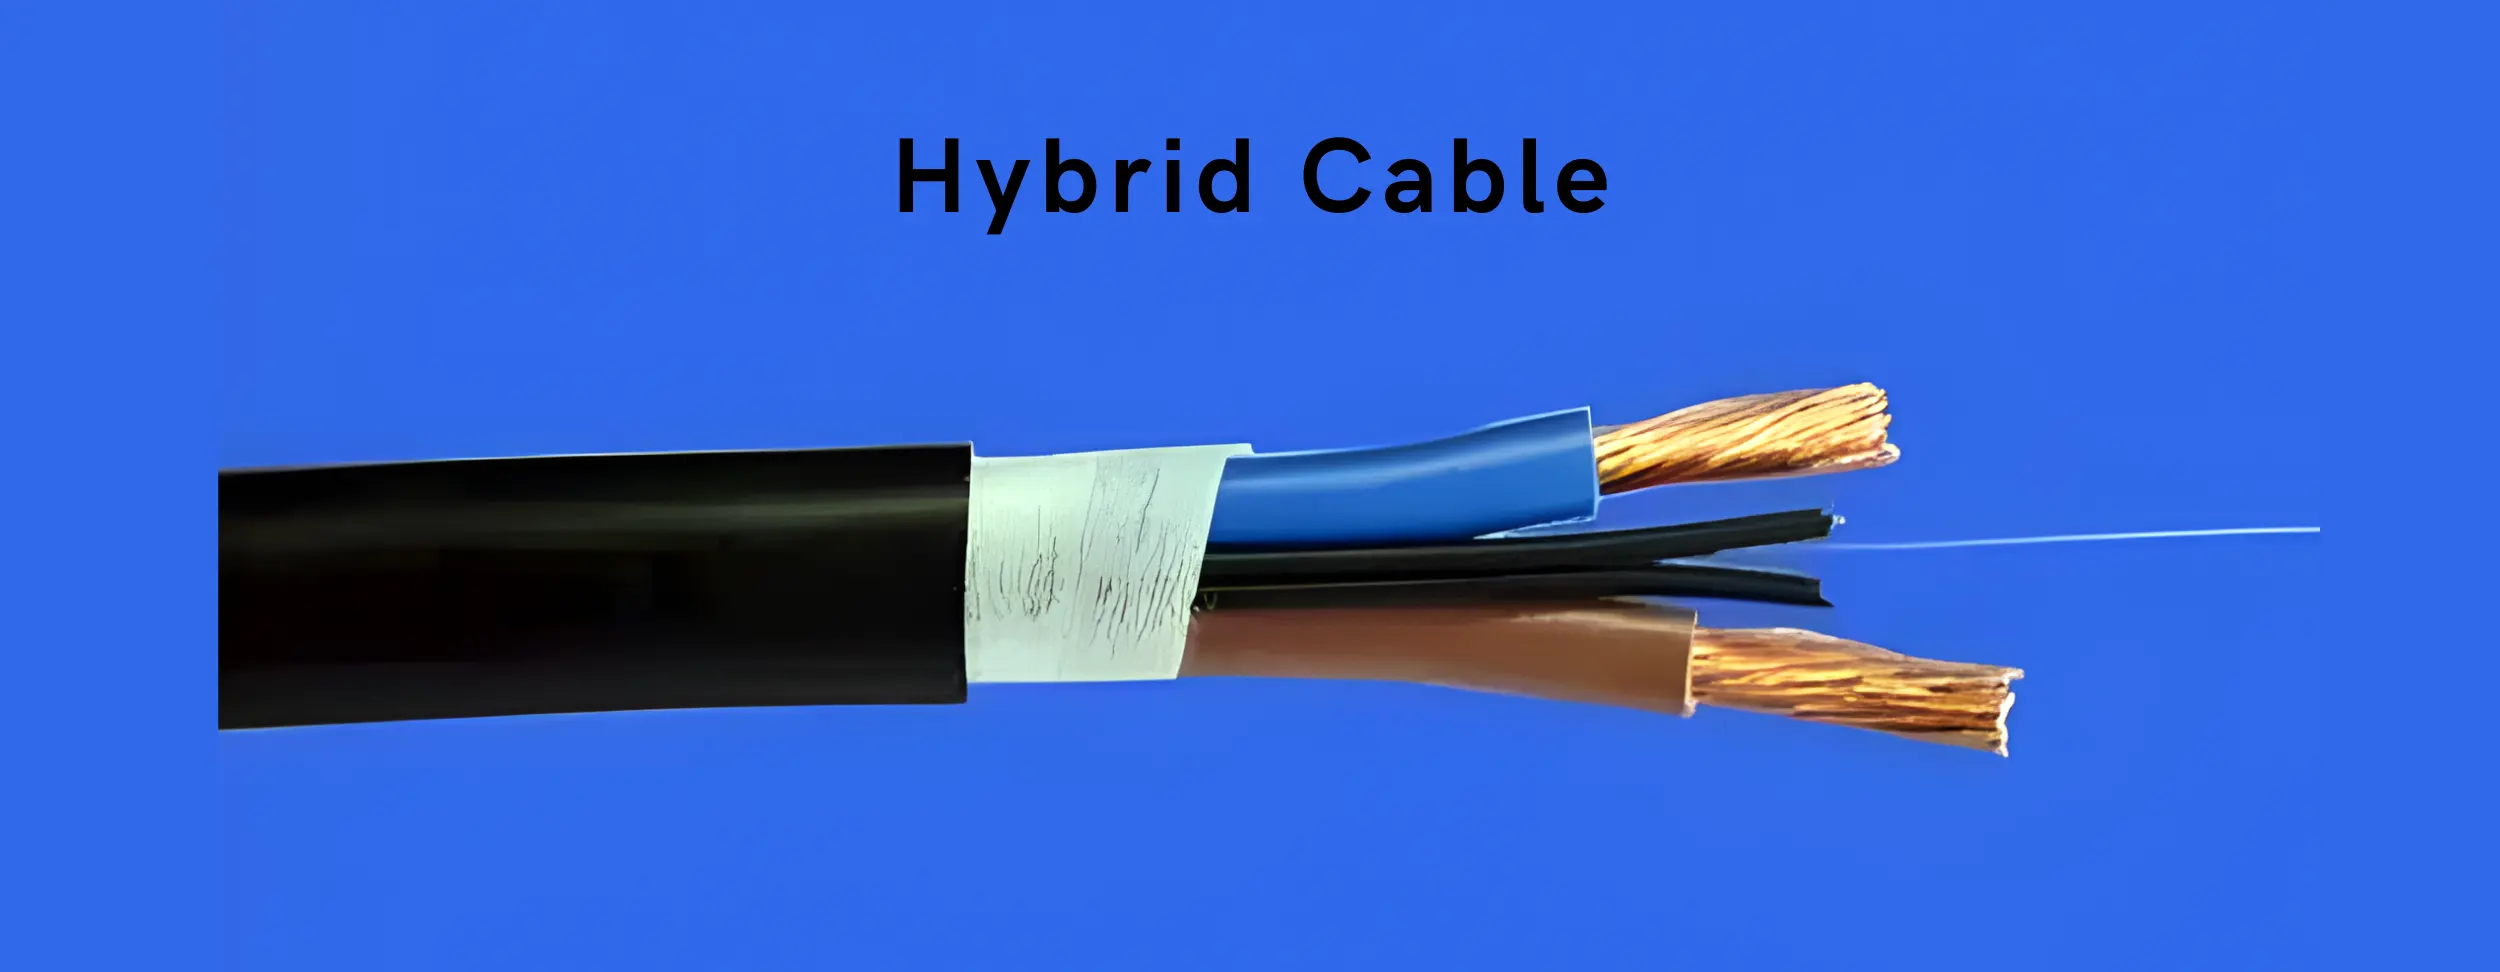 Fiber optic hybrid cable